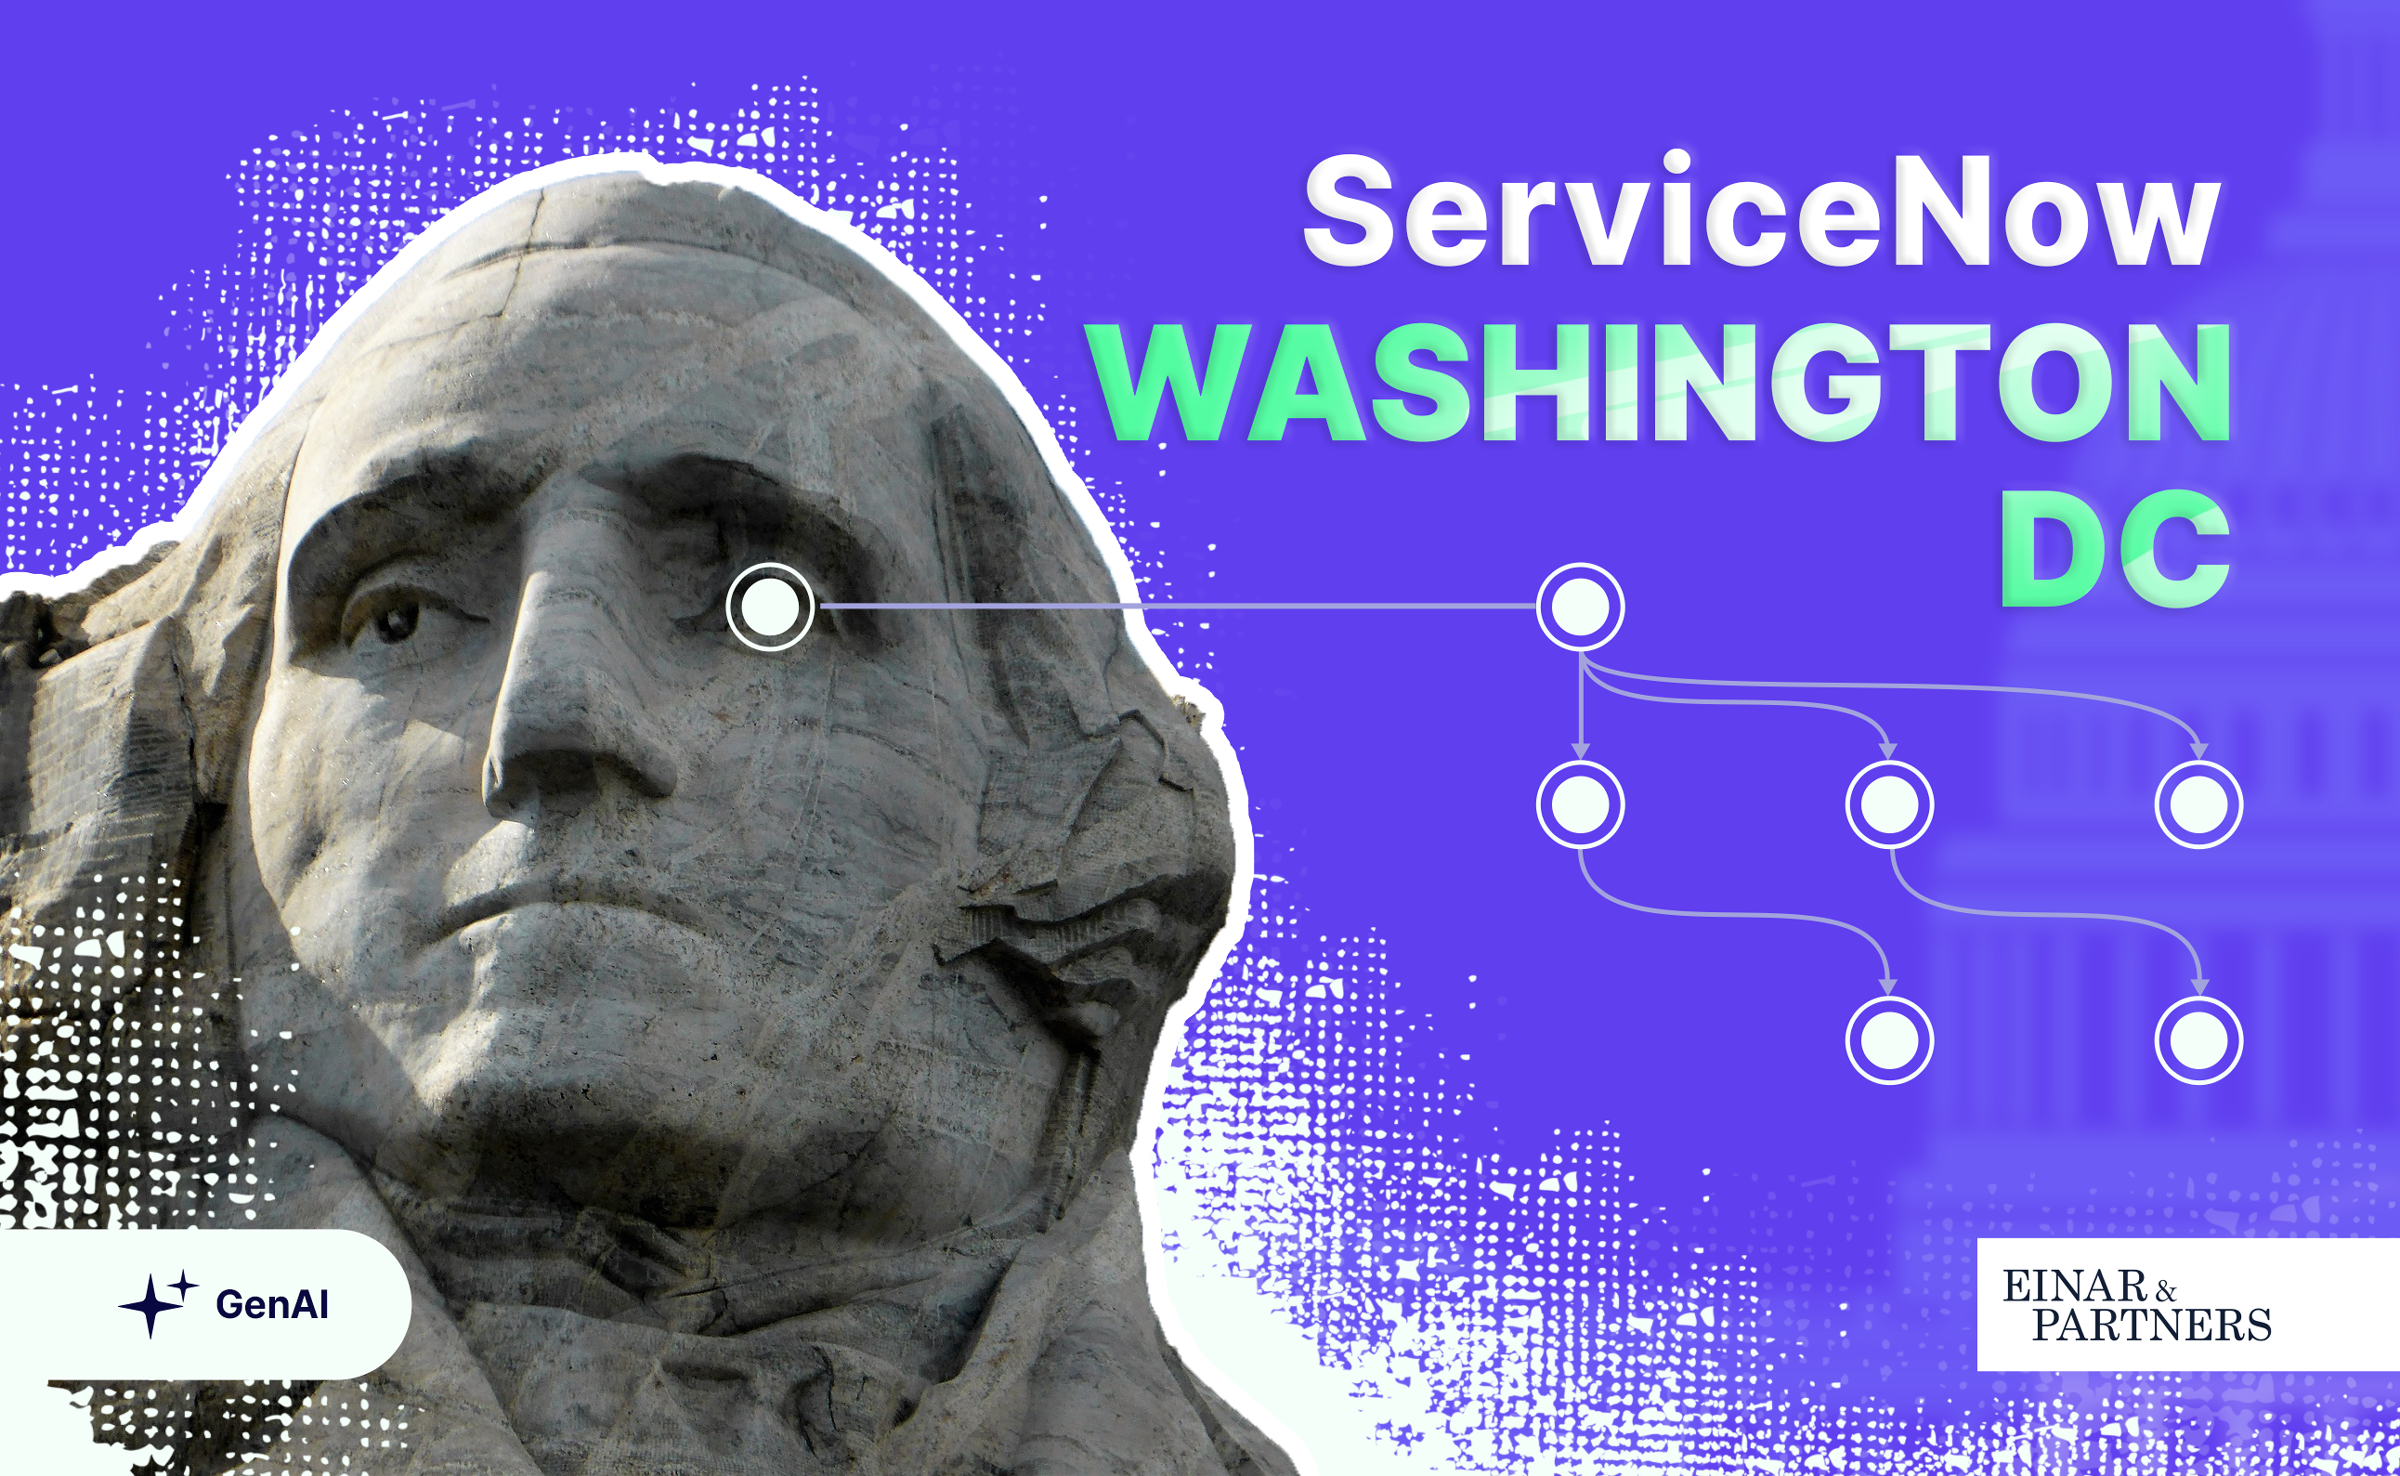 Washington DC ServiceNow Release